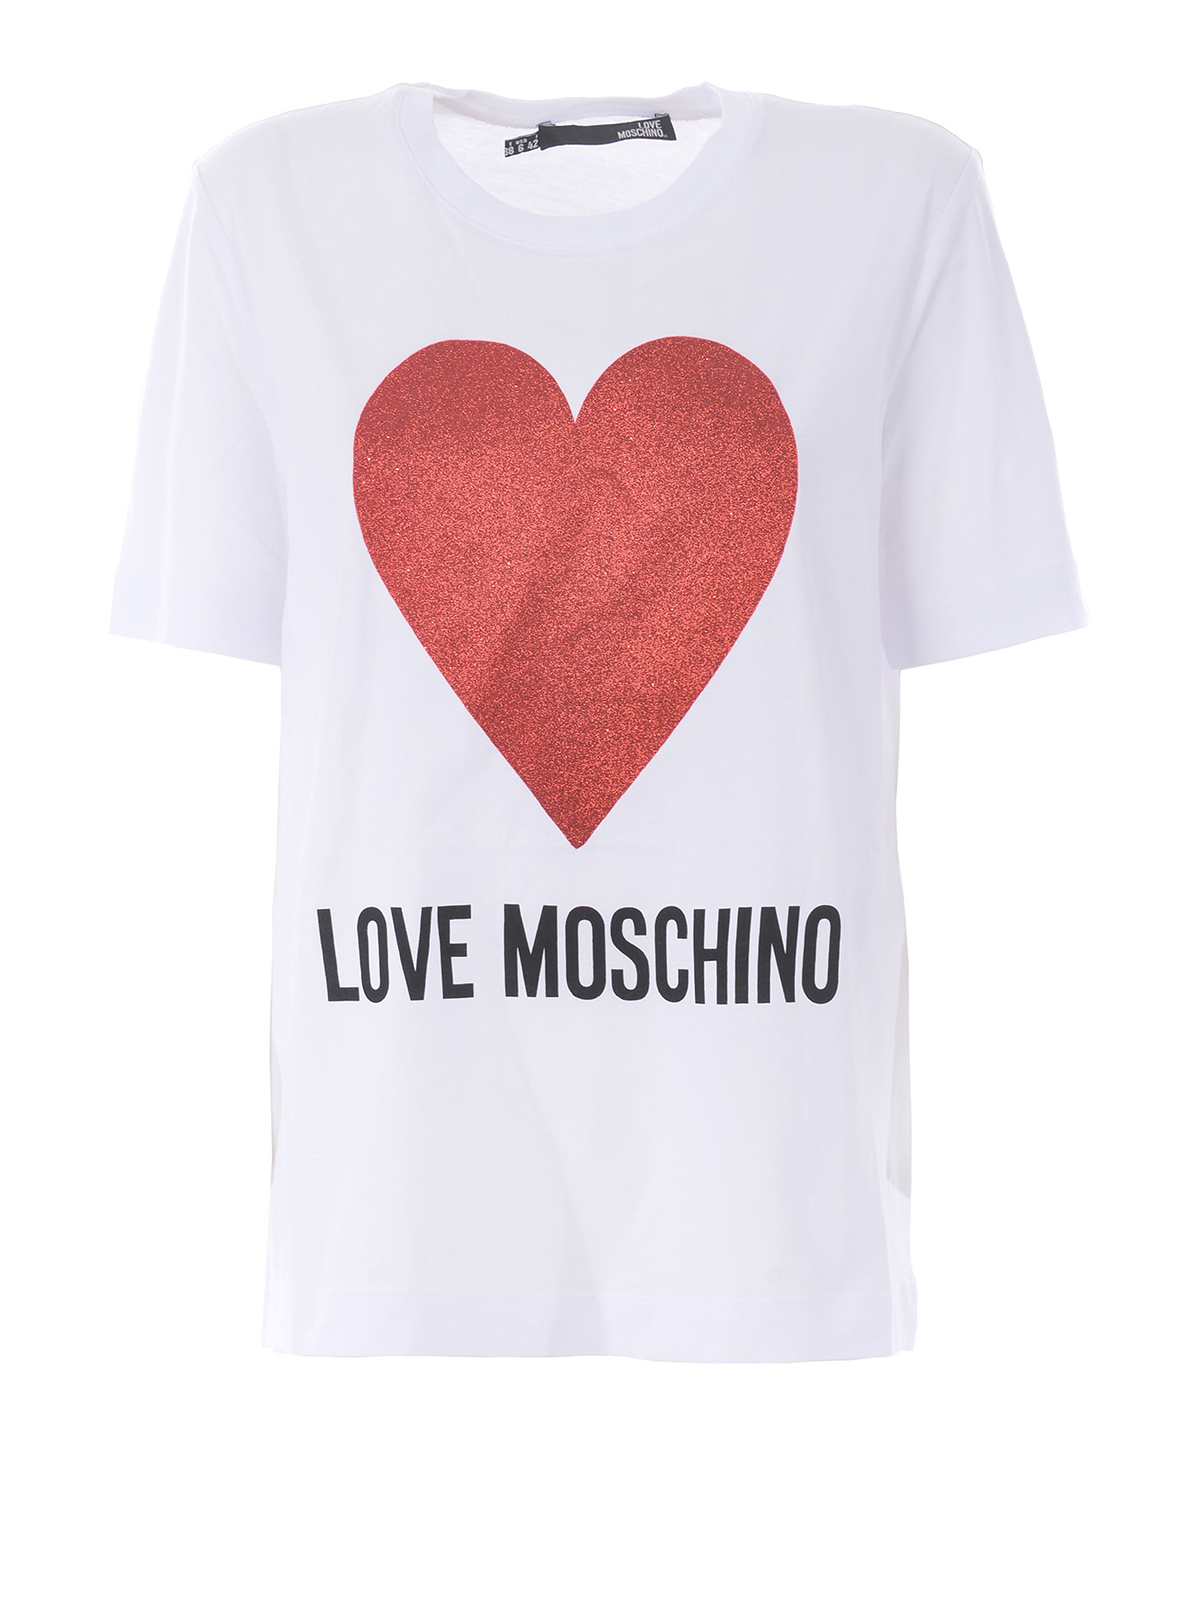 Tシャツ Love Moschino - Tシャツ - 白 - W4F151OM3517A00